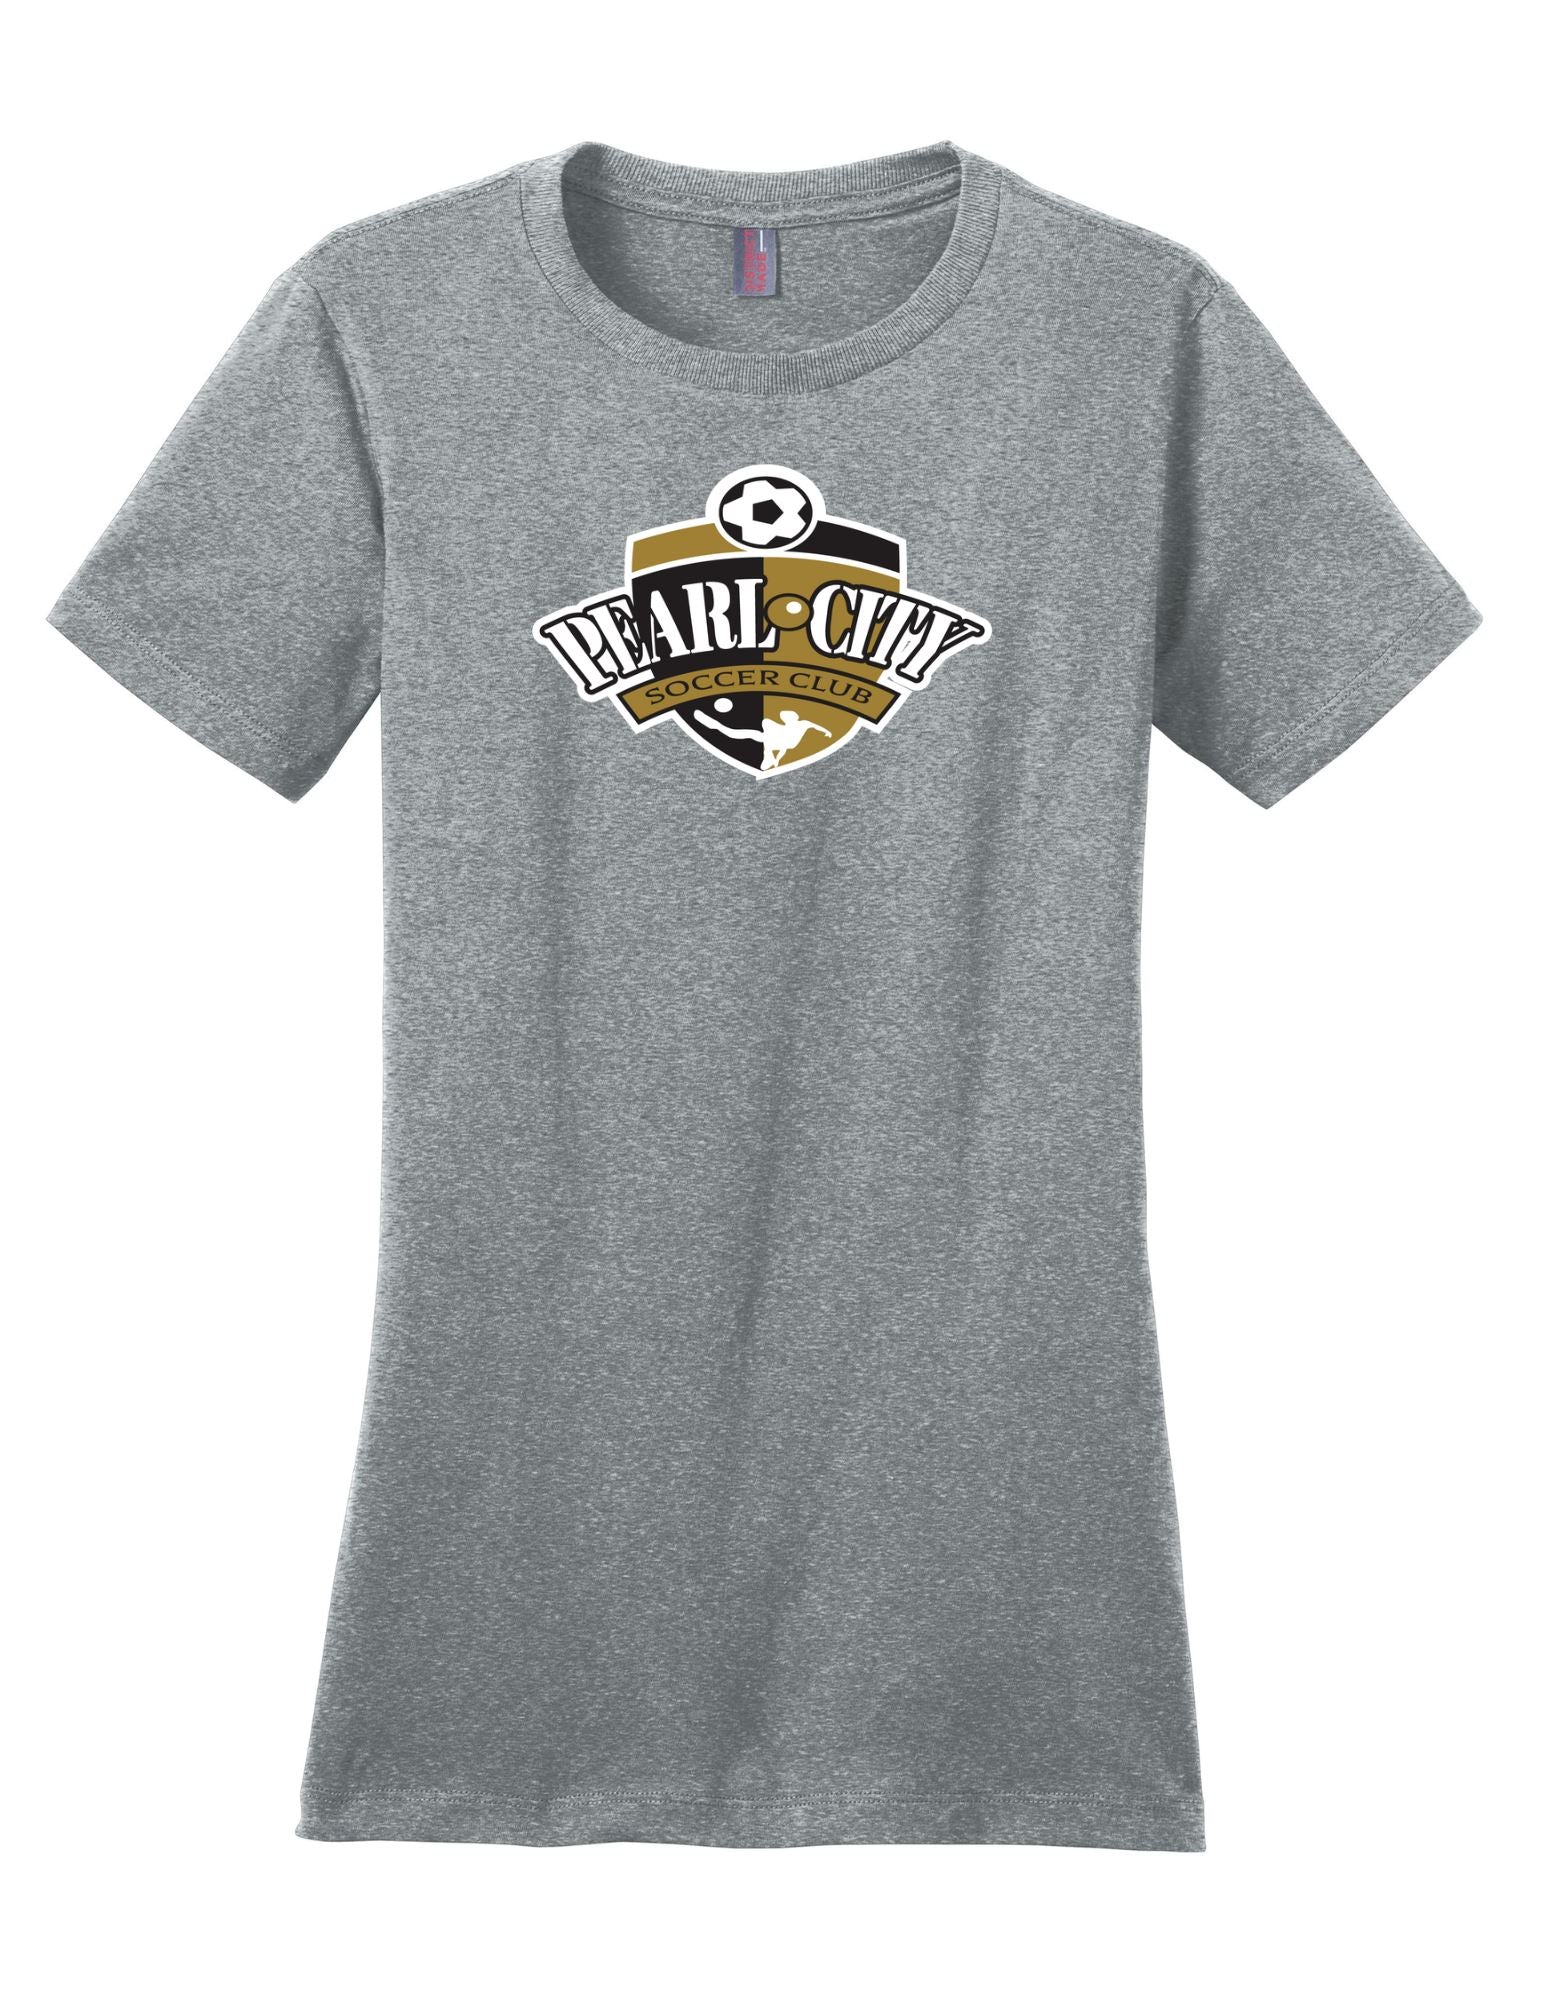 Pearl City Soccer Club Women's Tee Shirt Goal Kick Soccer X-Small Heathered Steel 